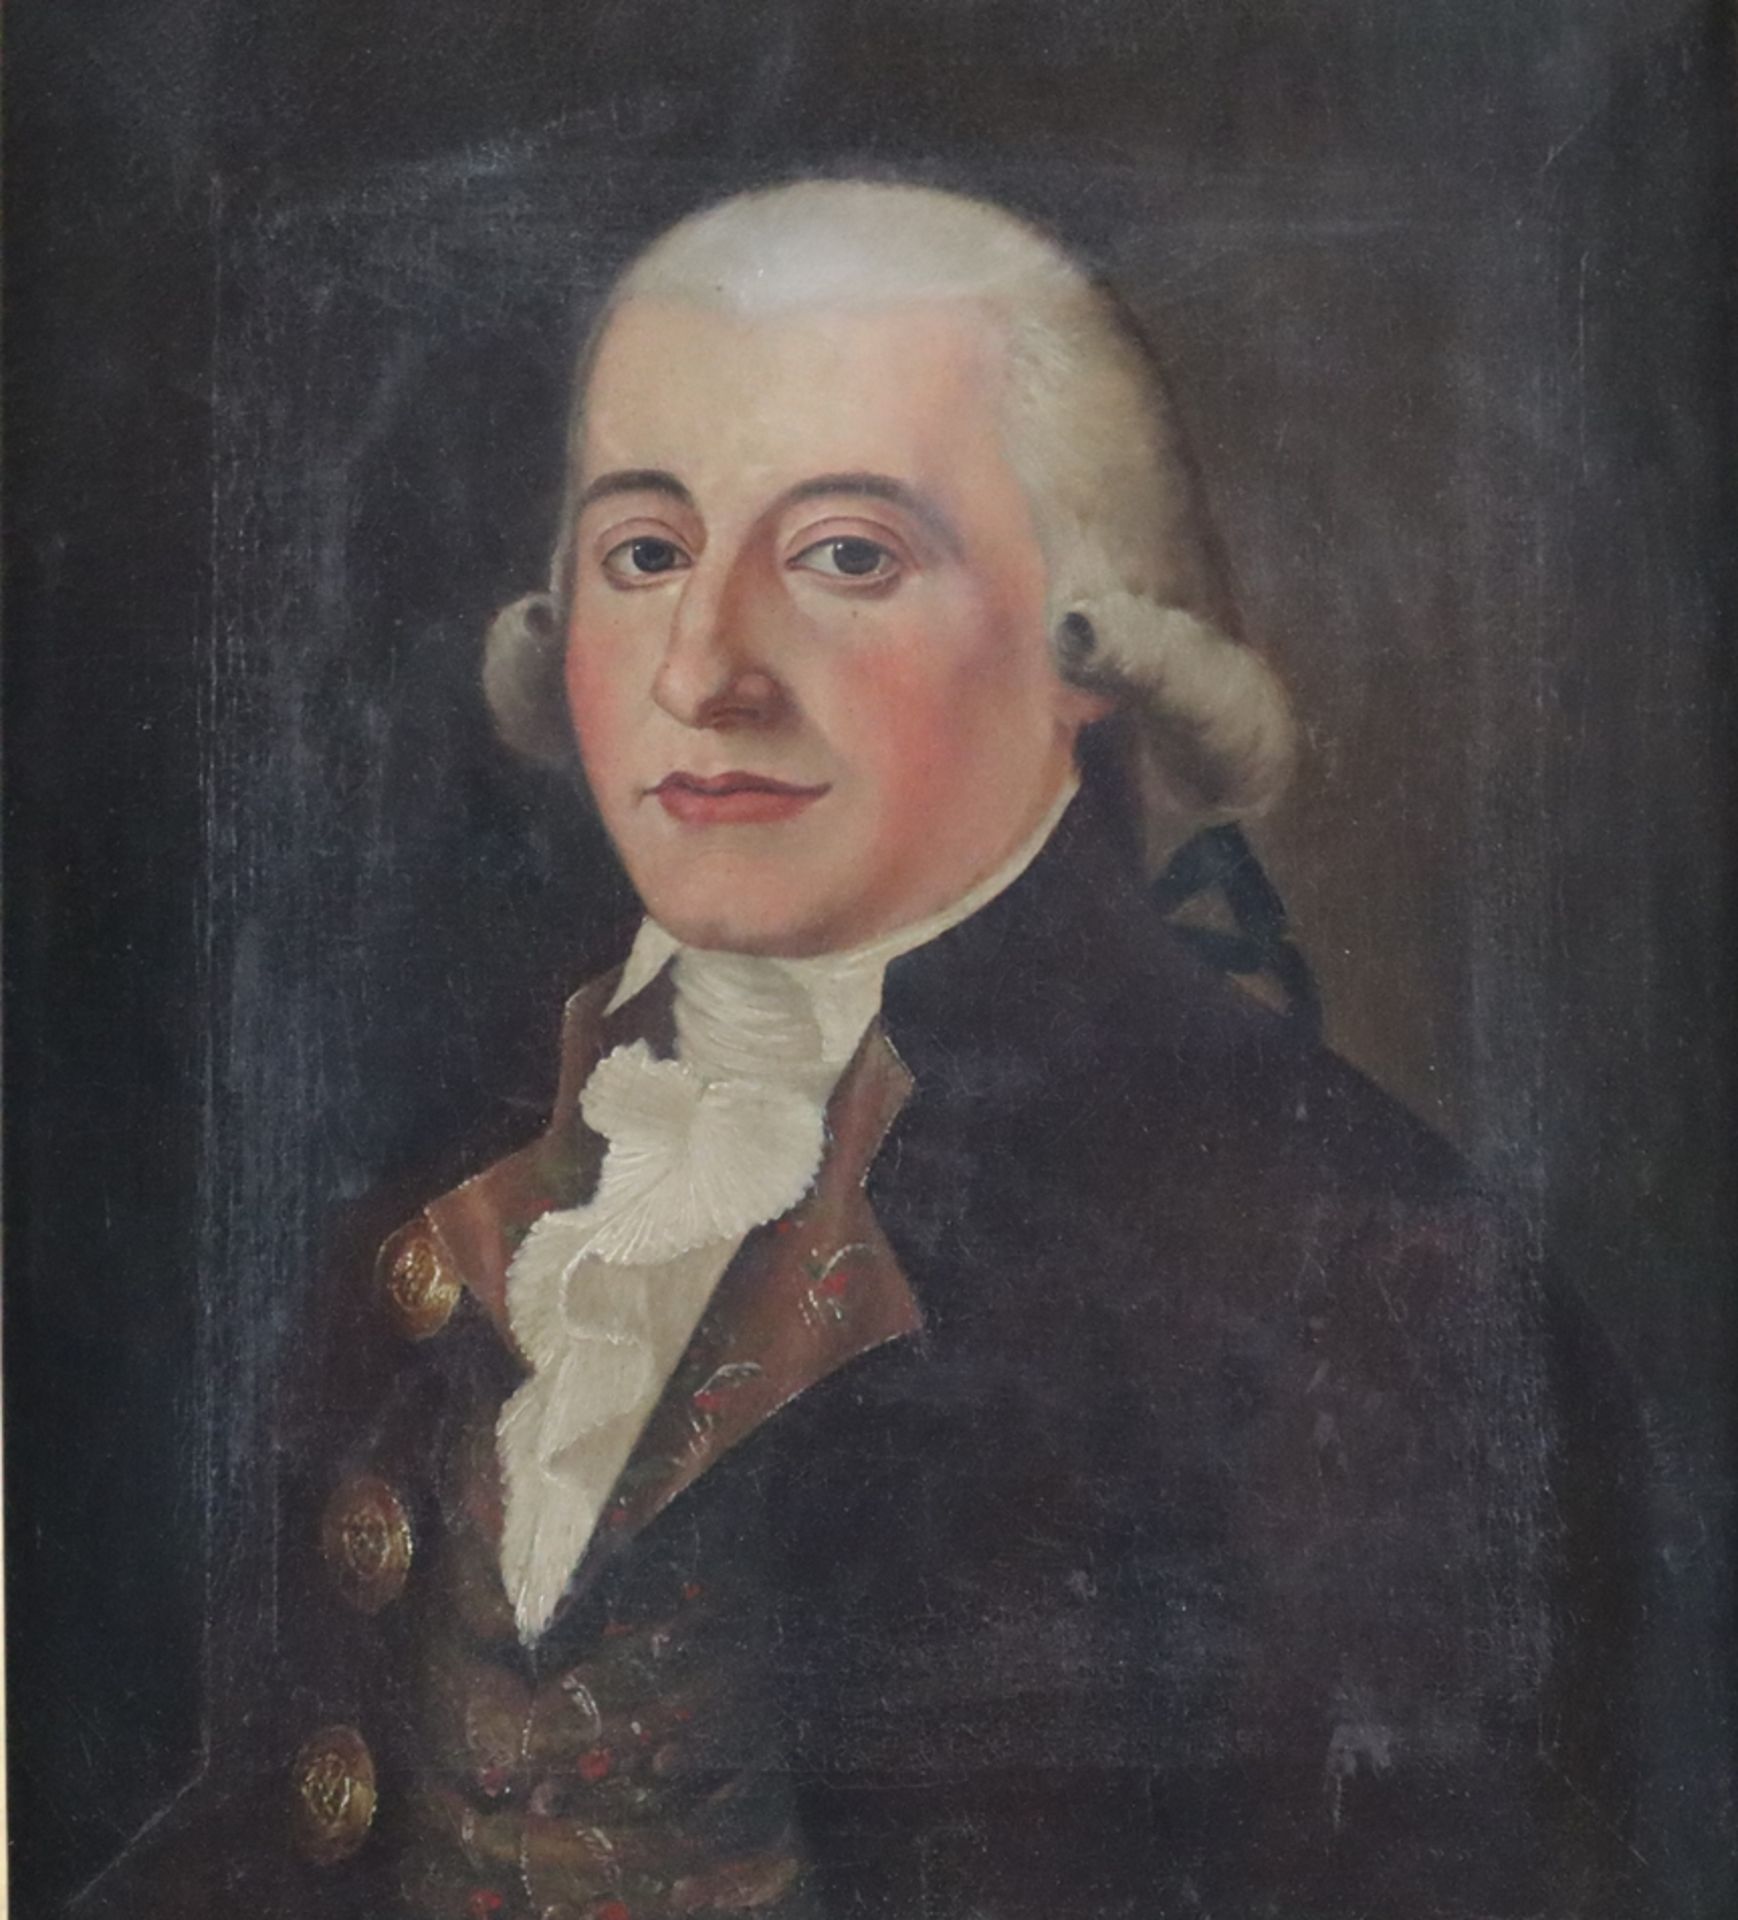 Bildnismaler -um 1800 - Portrait des Barmer Fabrikanten Wilhelm Johann II. Molineus (1768-1841) in